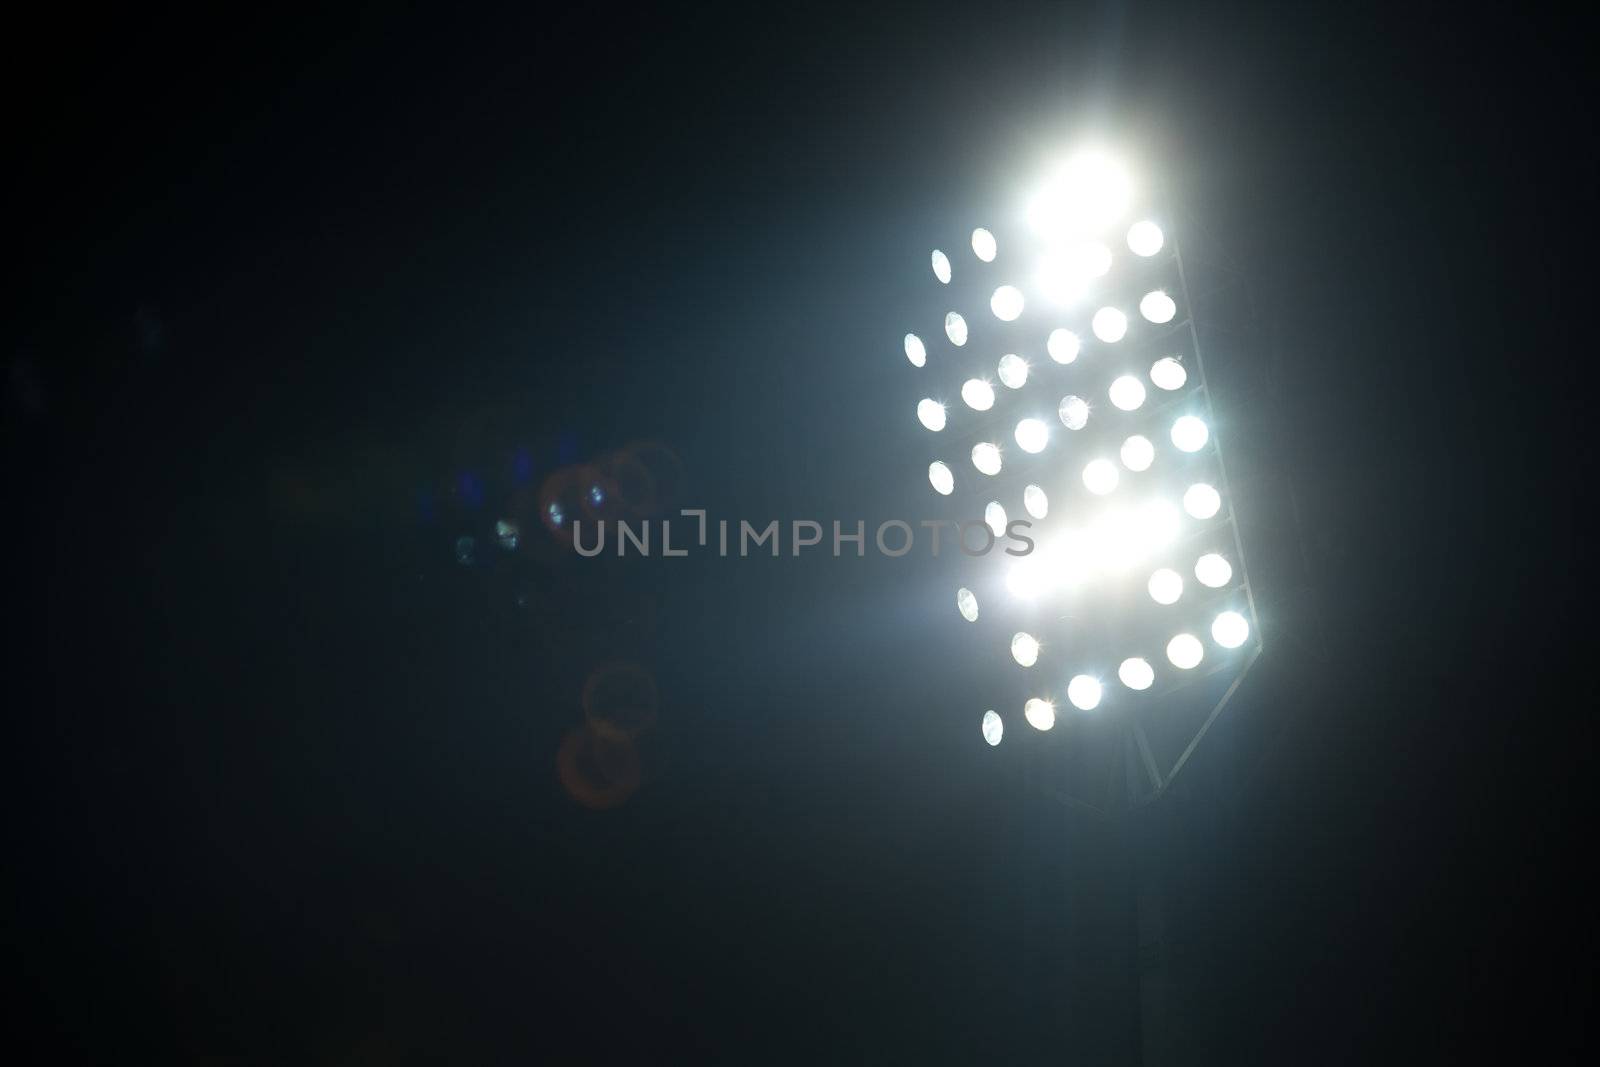 Stadium lights by Portokalis